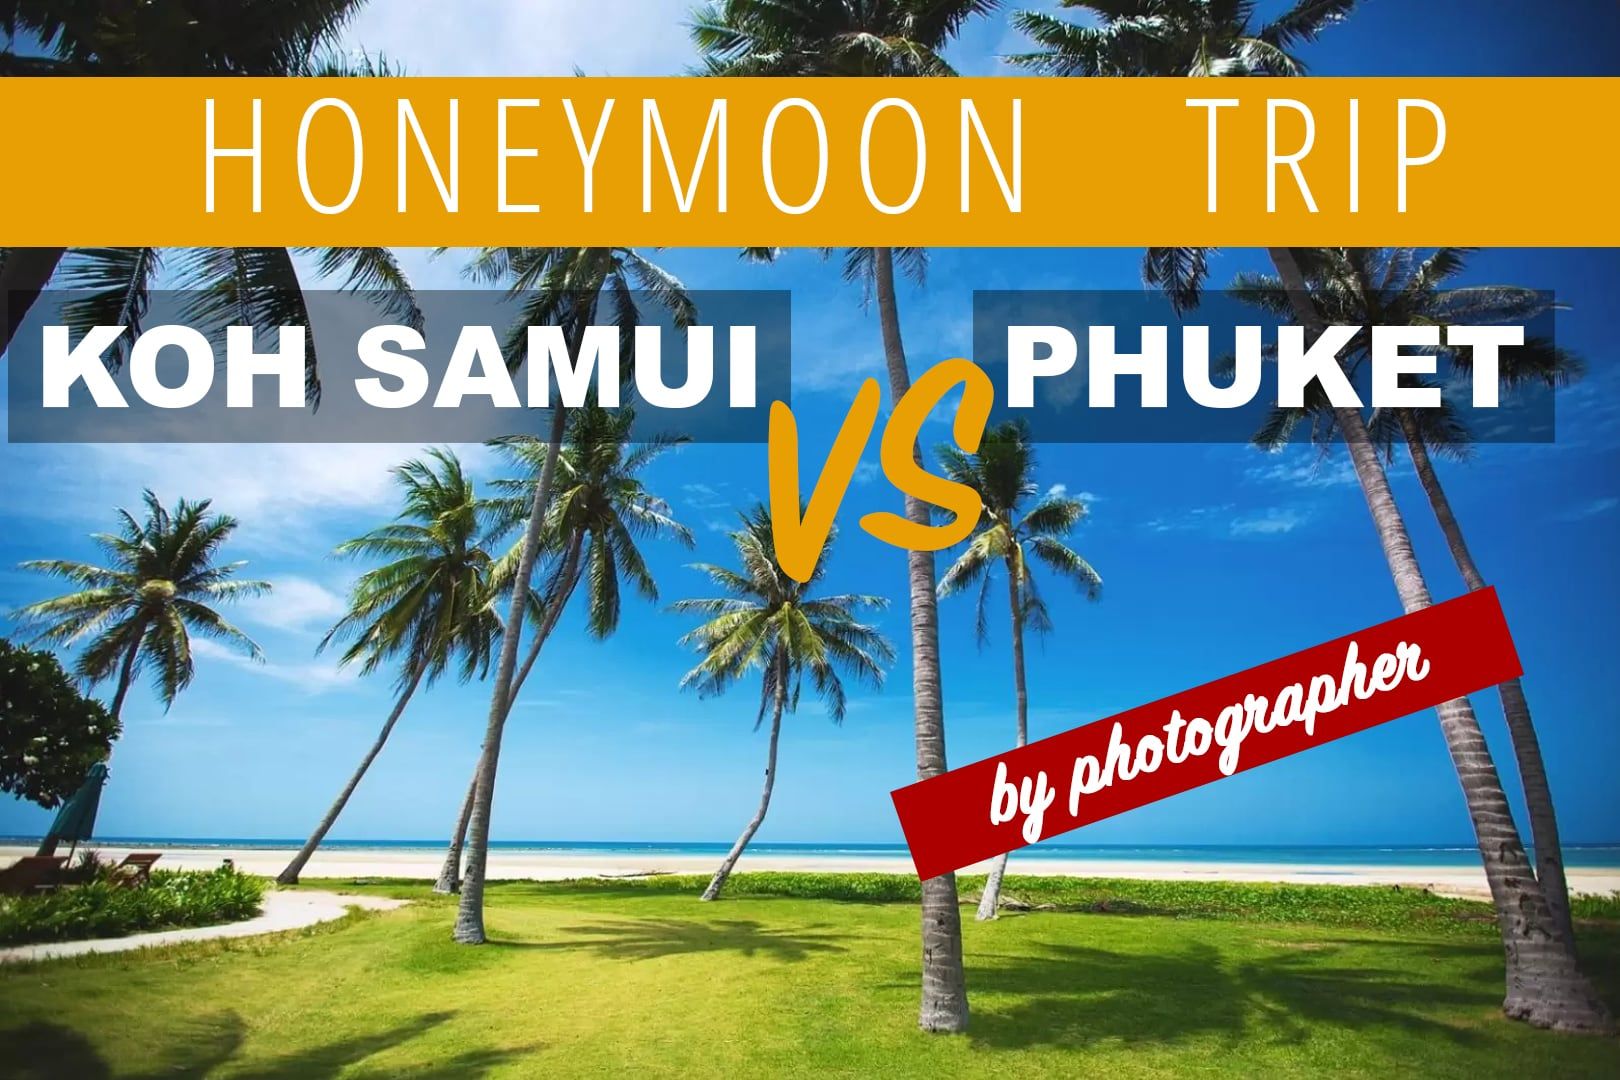 Post cover image: Koh Samui or Phuket for Honeymoon - 7 Reasons from Photographer